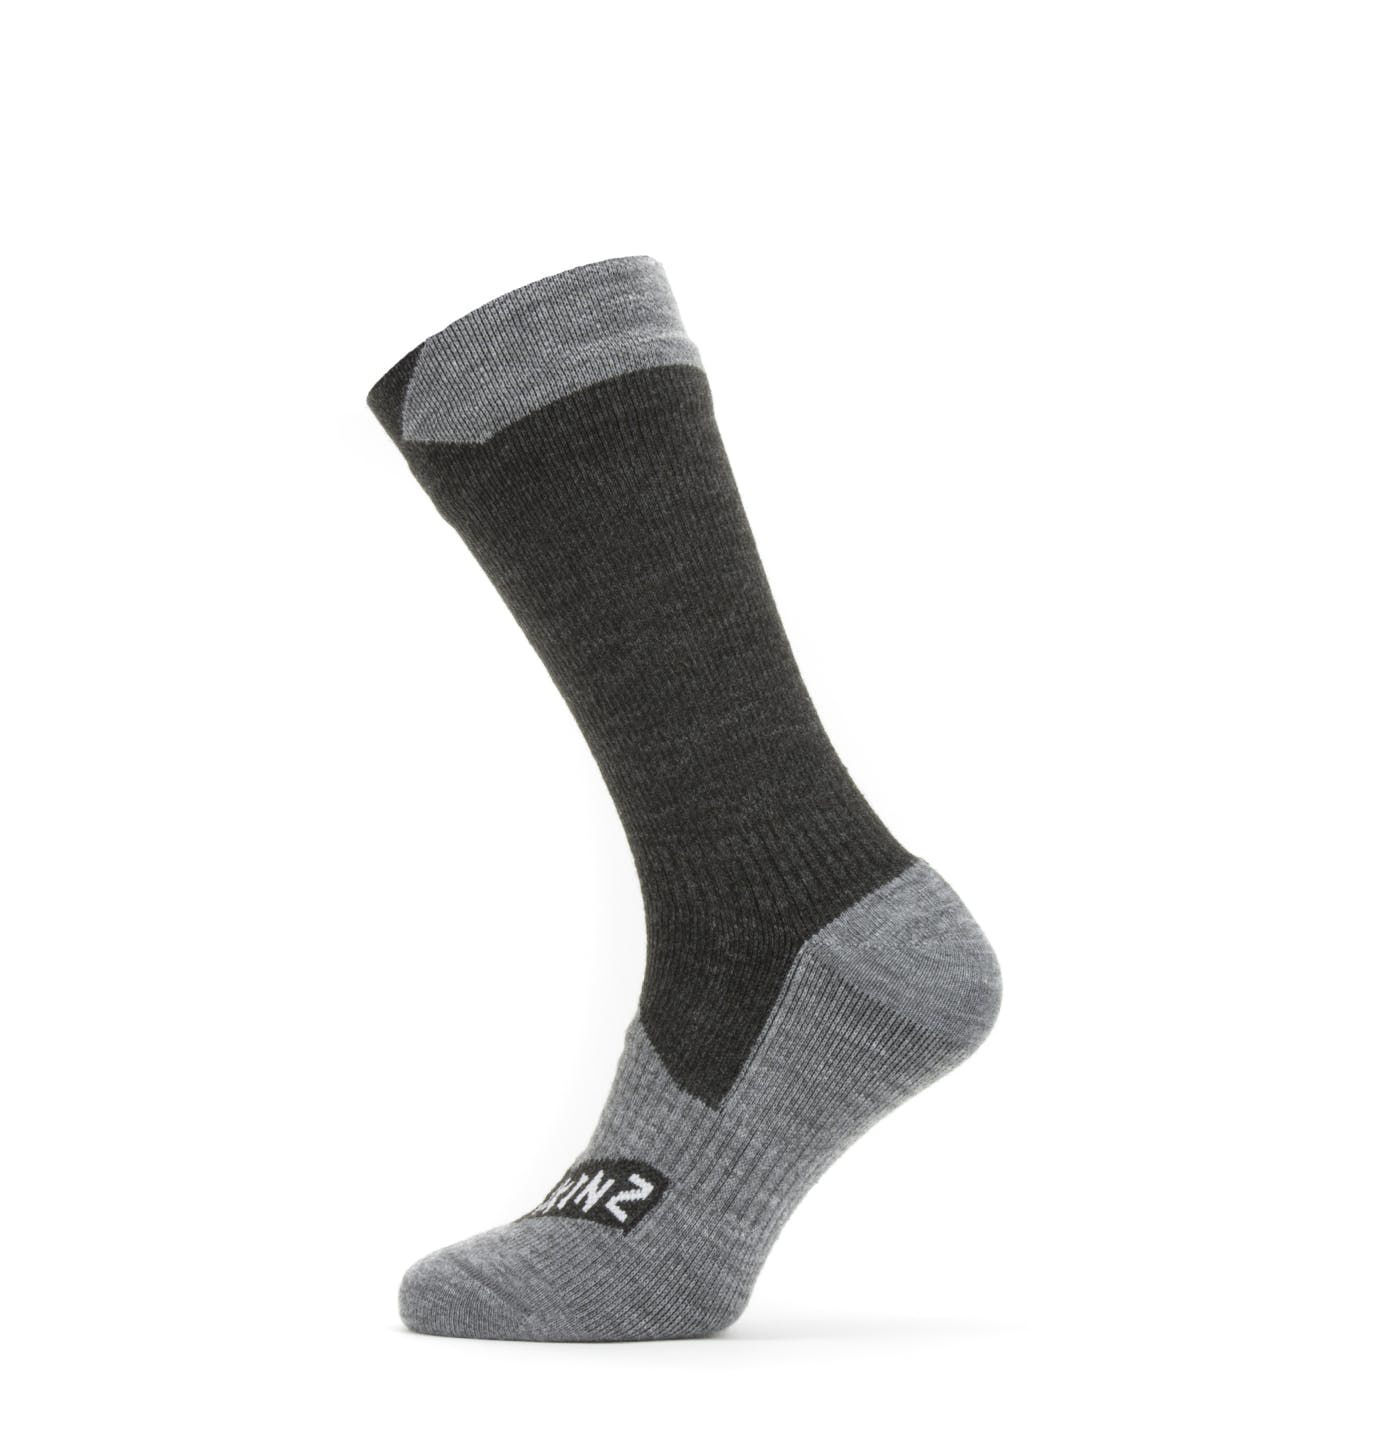 Sealskinz Waterproof All Weather Mid Sock in Black / Grey Marl